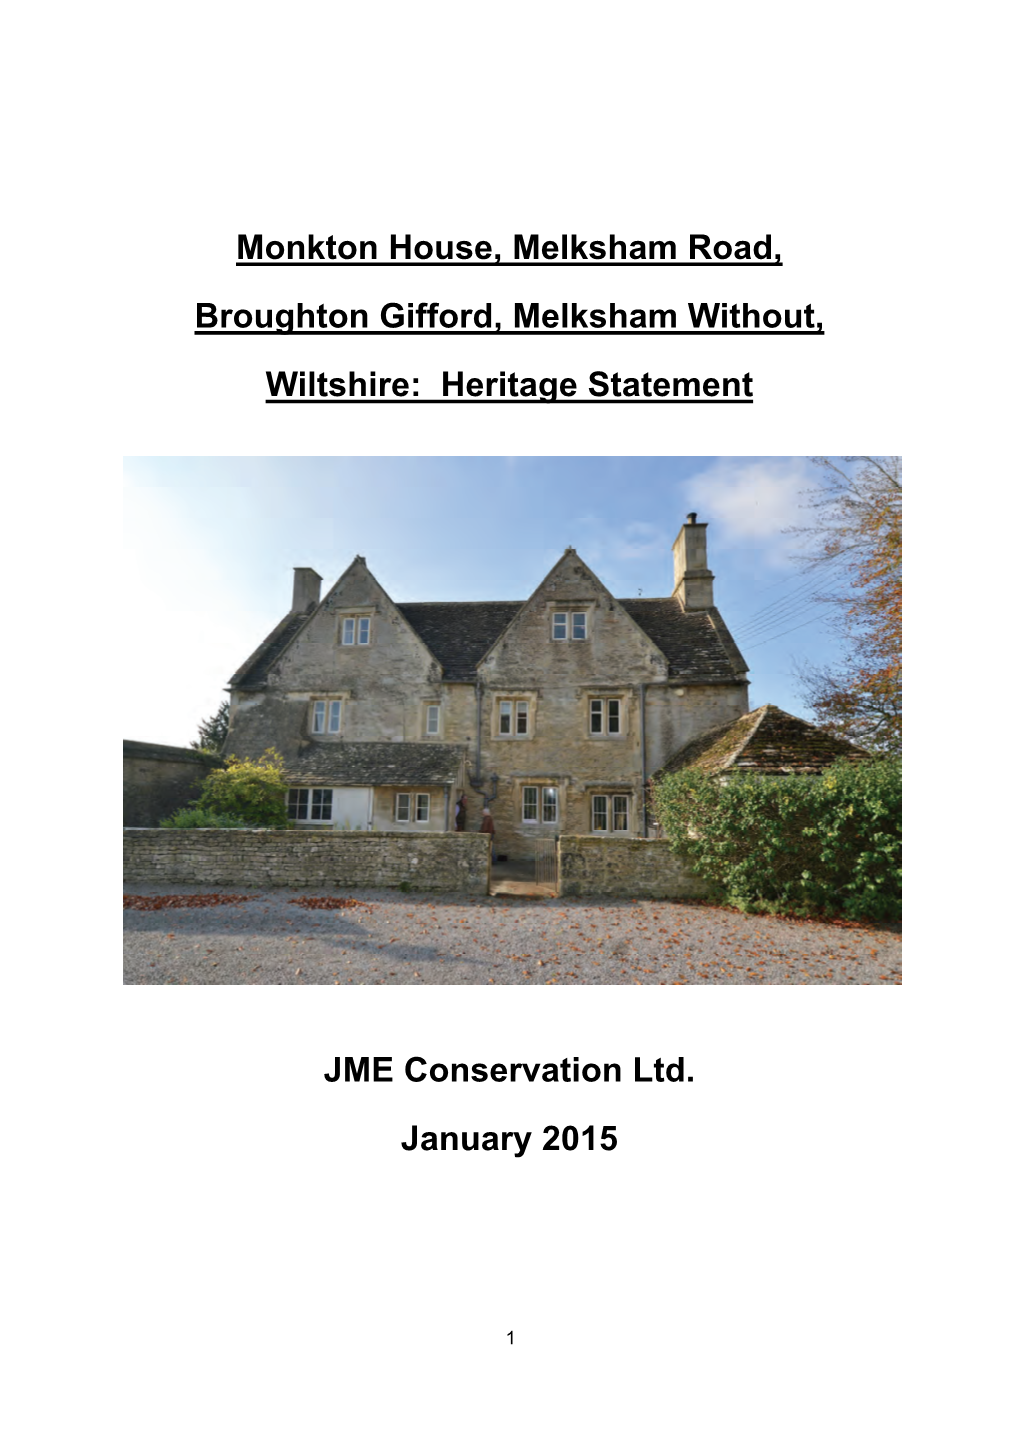 Monkton House, Melksham Road, Broughton Gifford, Melksham Without, Wiltshire